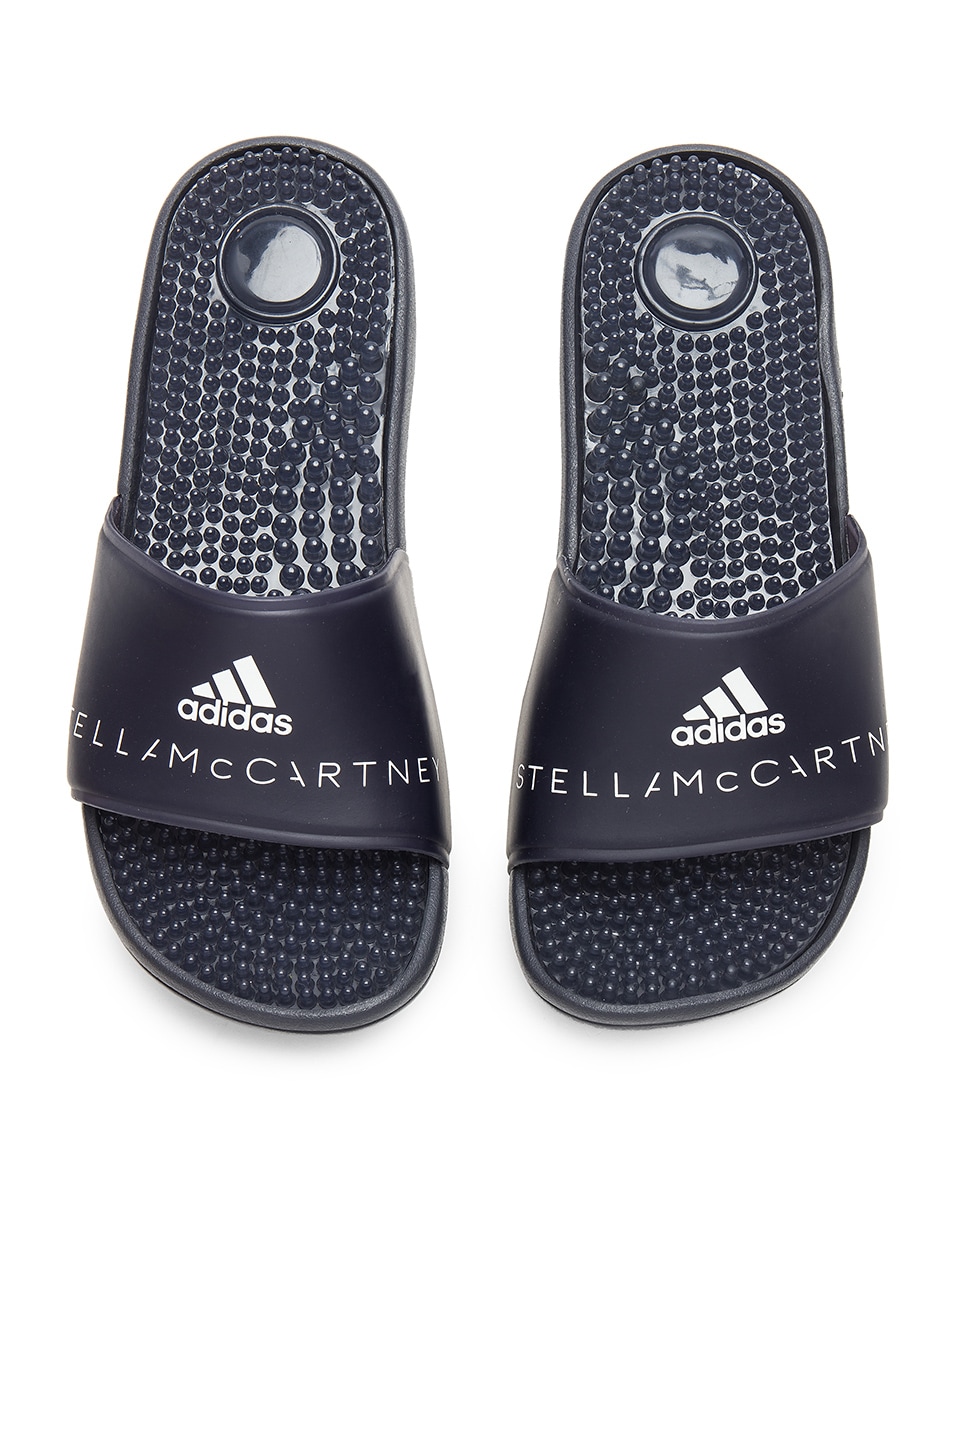 stella mccartney adidas sandals